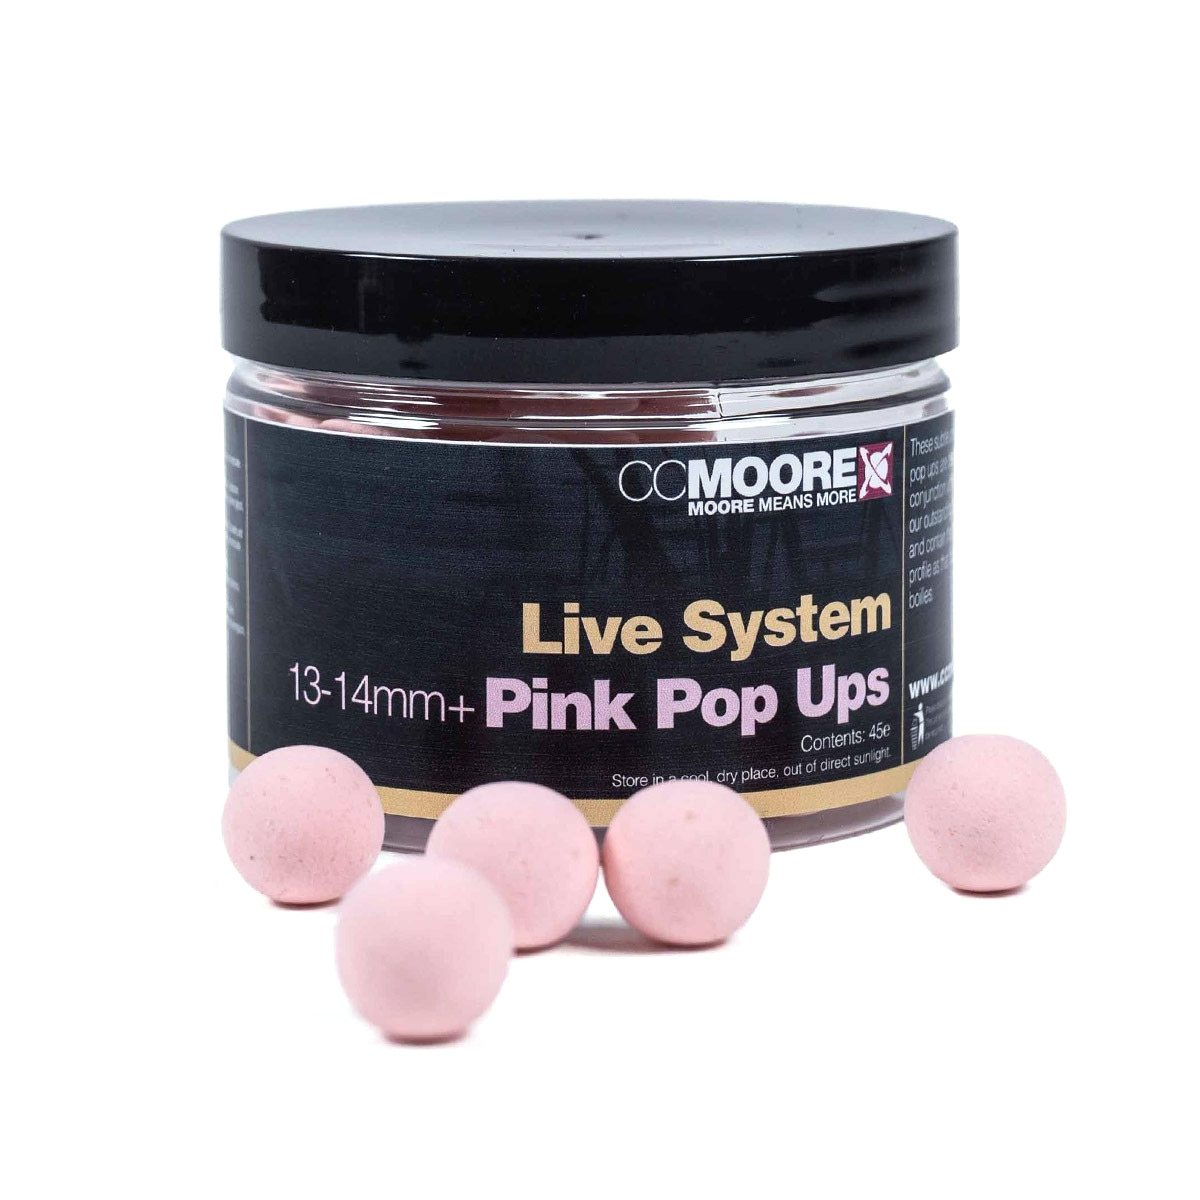 Cc moore Live System Pink Pop Ups 13-14mm